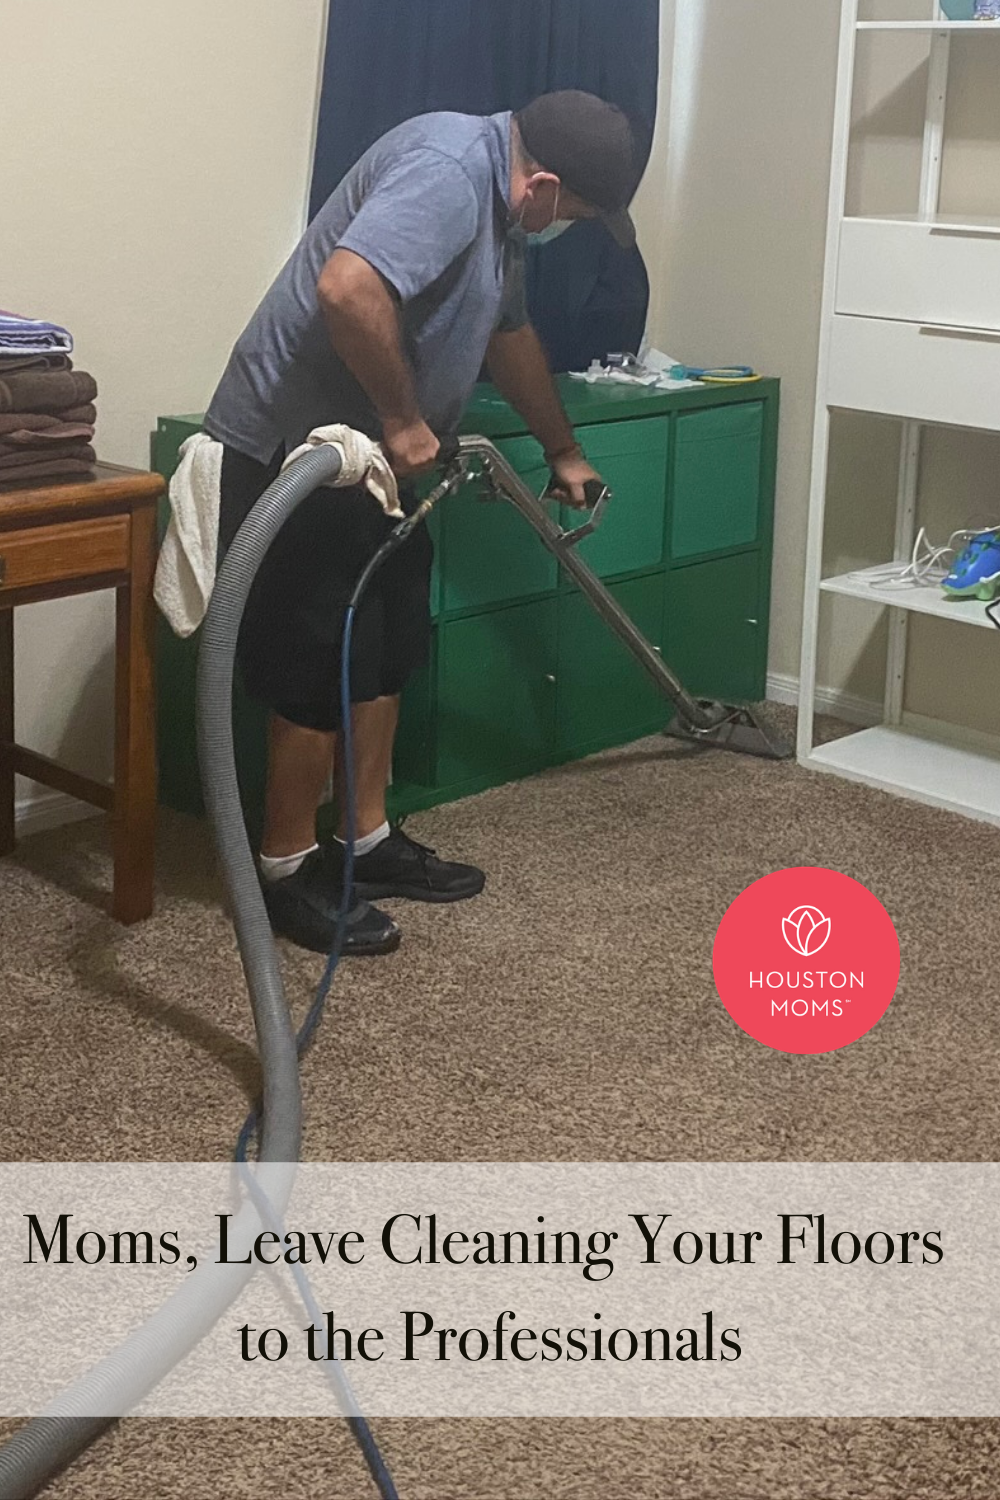 Houston Moms "Moms, Leave Cleaning Your Floors to the Professionals" #houstonmoms #houstonmomsblog #momsaroundhouston